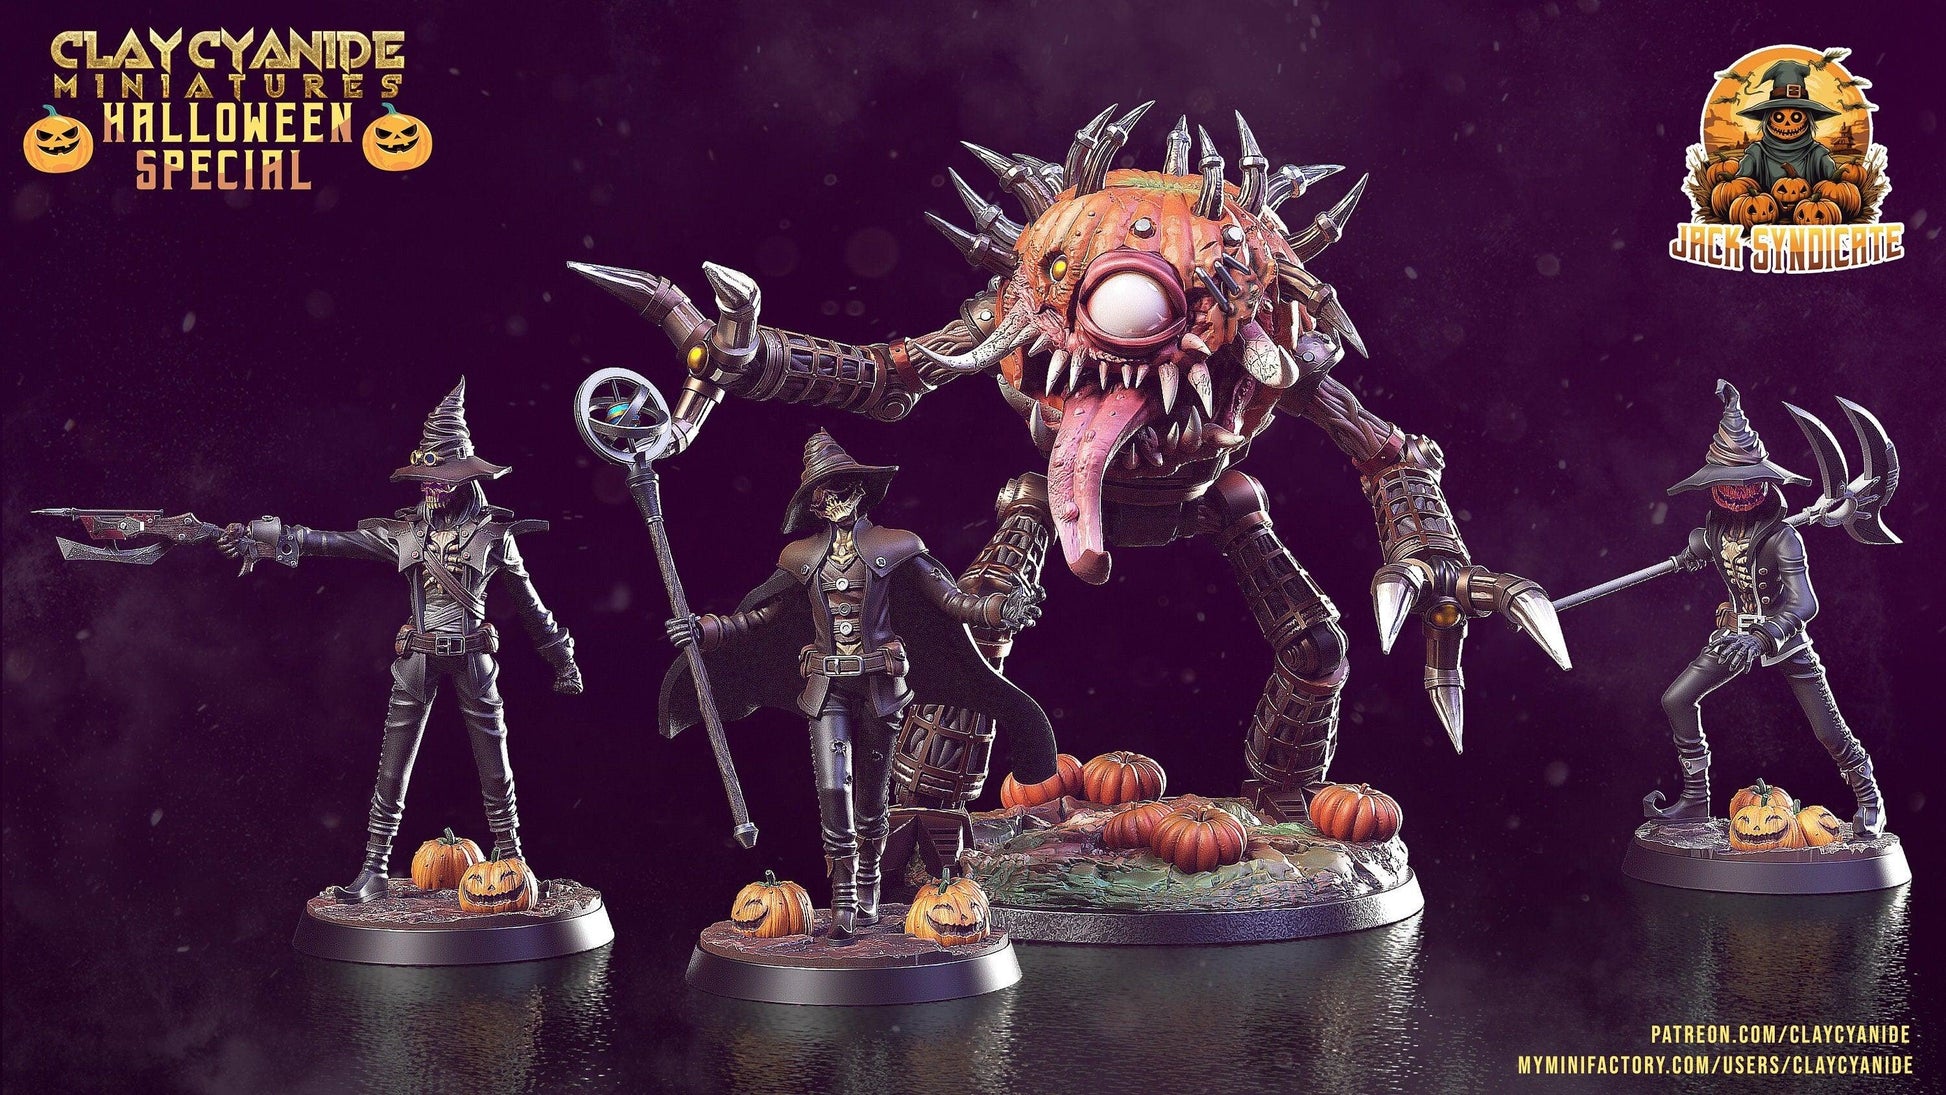 Phantomstalk DnD Skeleton Miniature | Eerie Halloween Monster | 32mm Scale - Plague Miniatures shop for DnD Miniatures